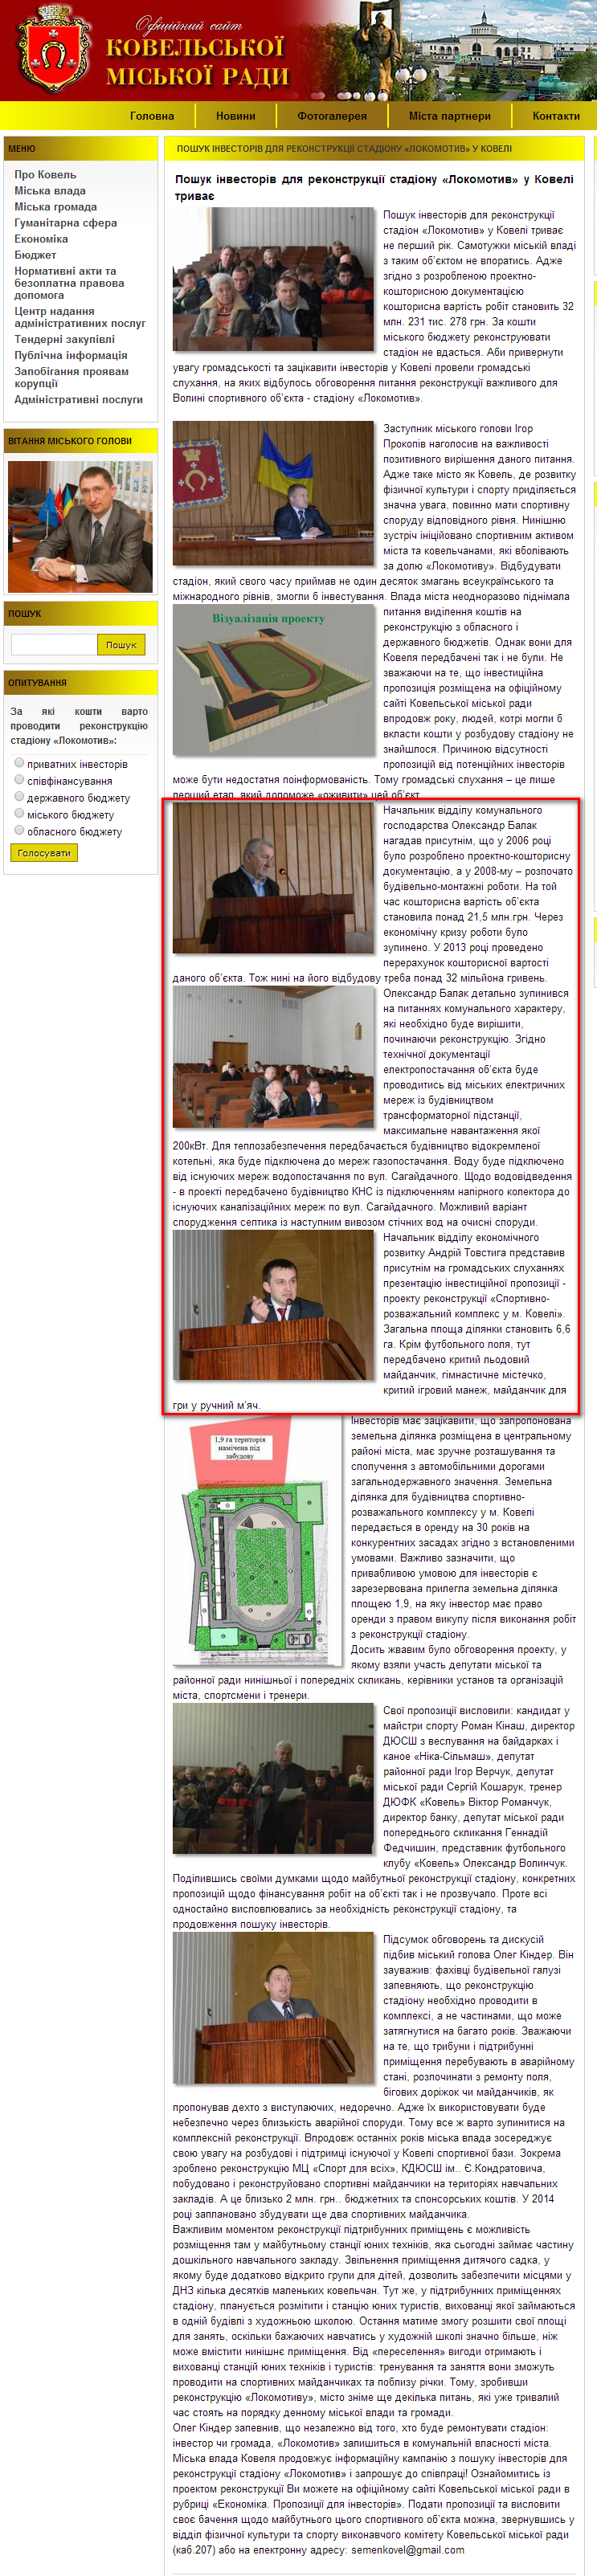 http://www.kovelrada.gov.ua/news-2008.html